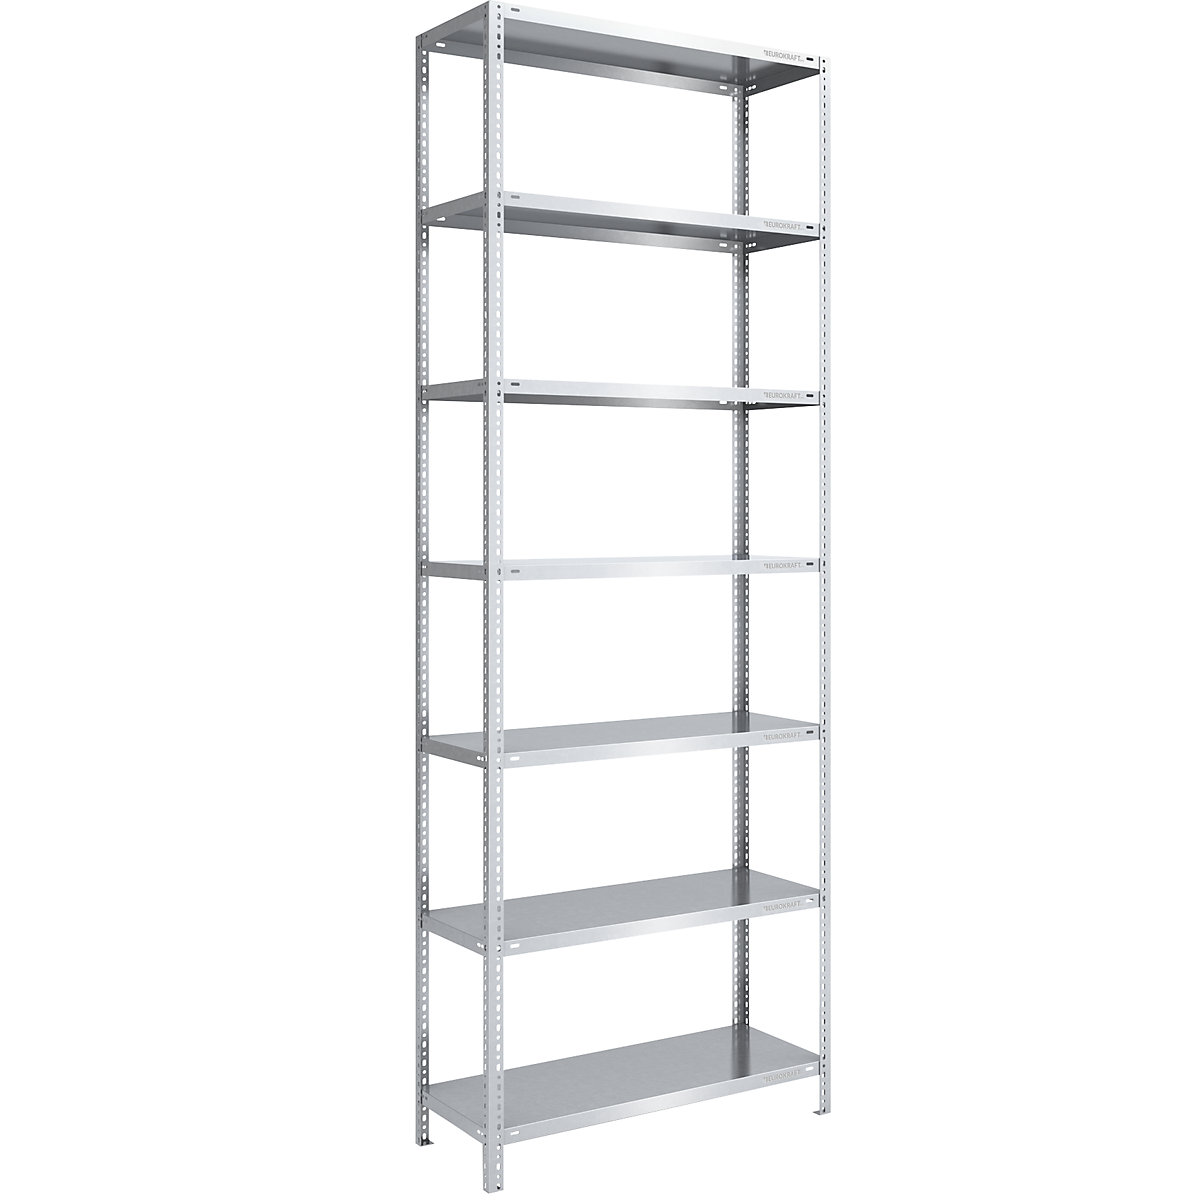 Bolt-together storage shelving, zinc plated, medium duty – eurokraft pro, shelf unit height 3000 mm, shelf width 1000 mm, depth 500 mm, standard shelf unit-8